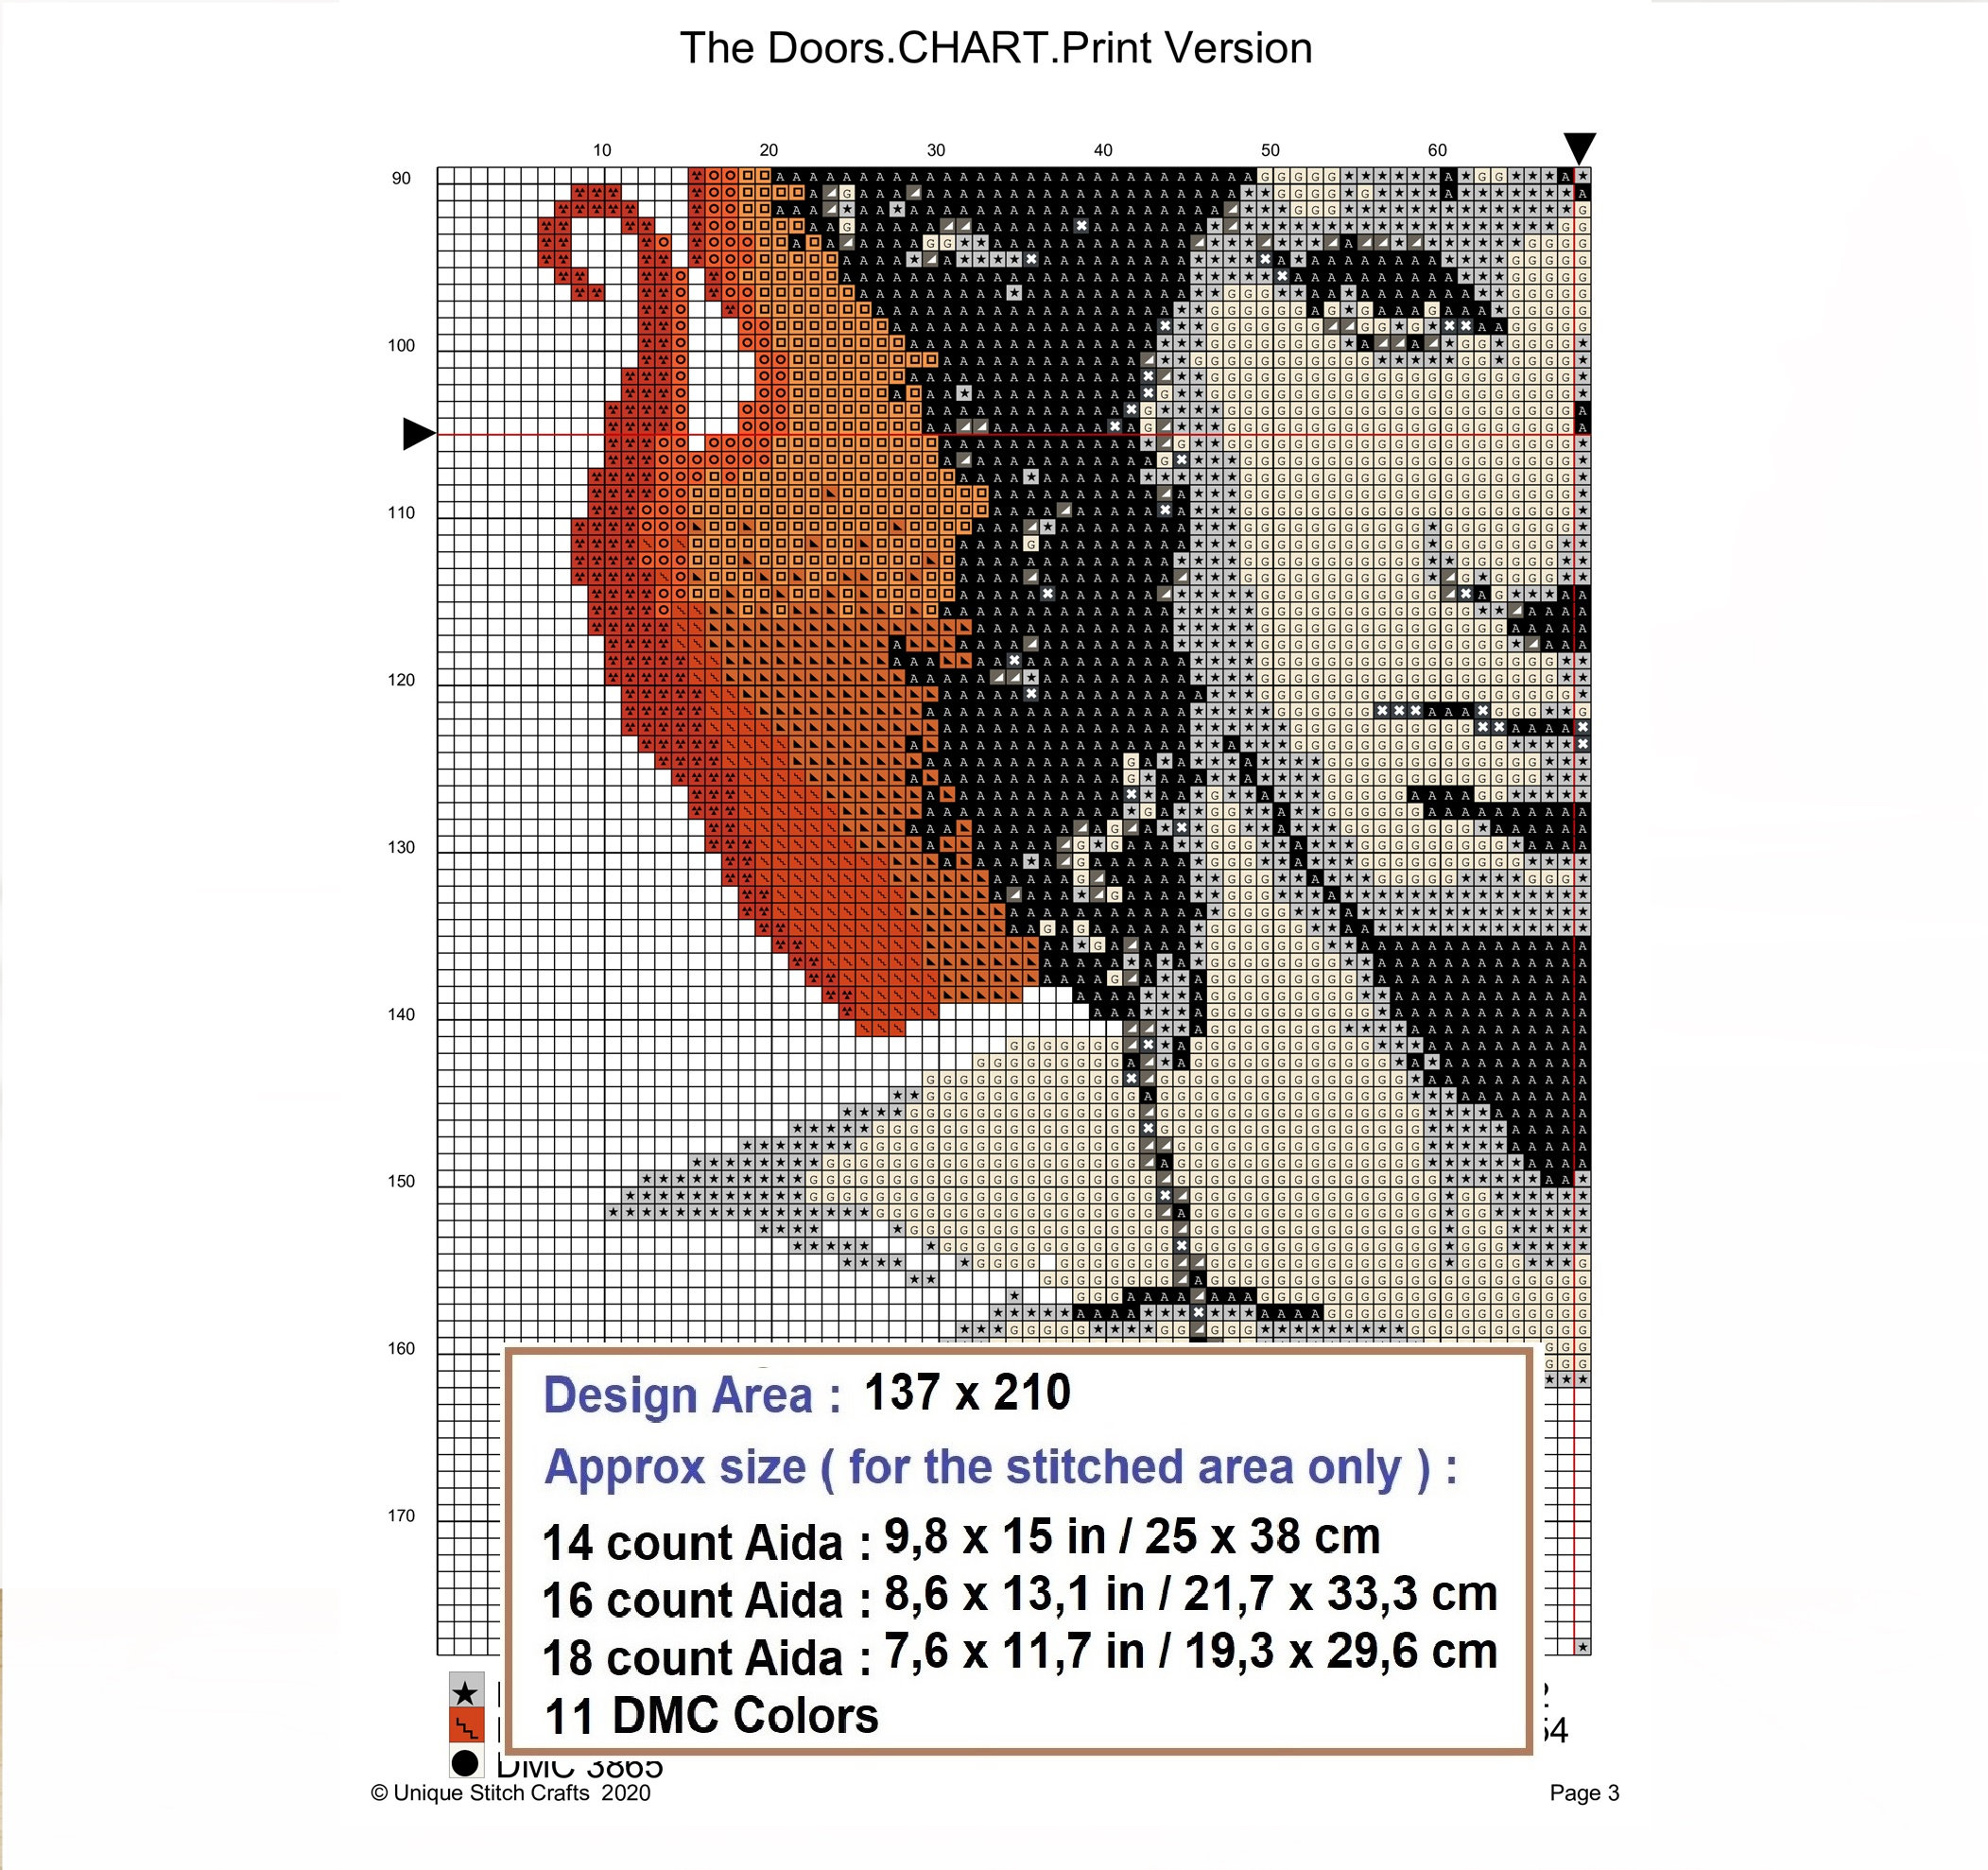 Cover Art Cross stitch chart pattern of The Doors Jim Morrison Album LP